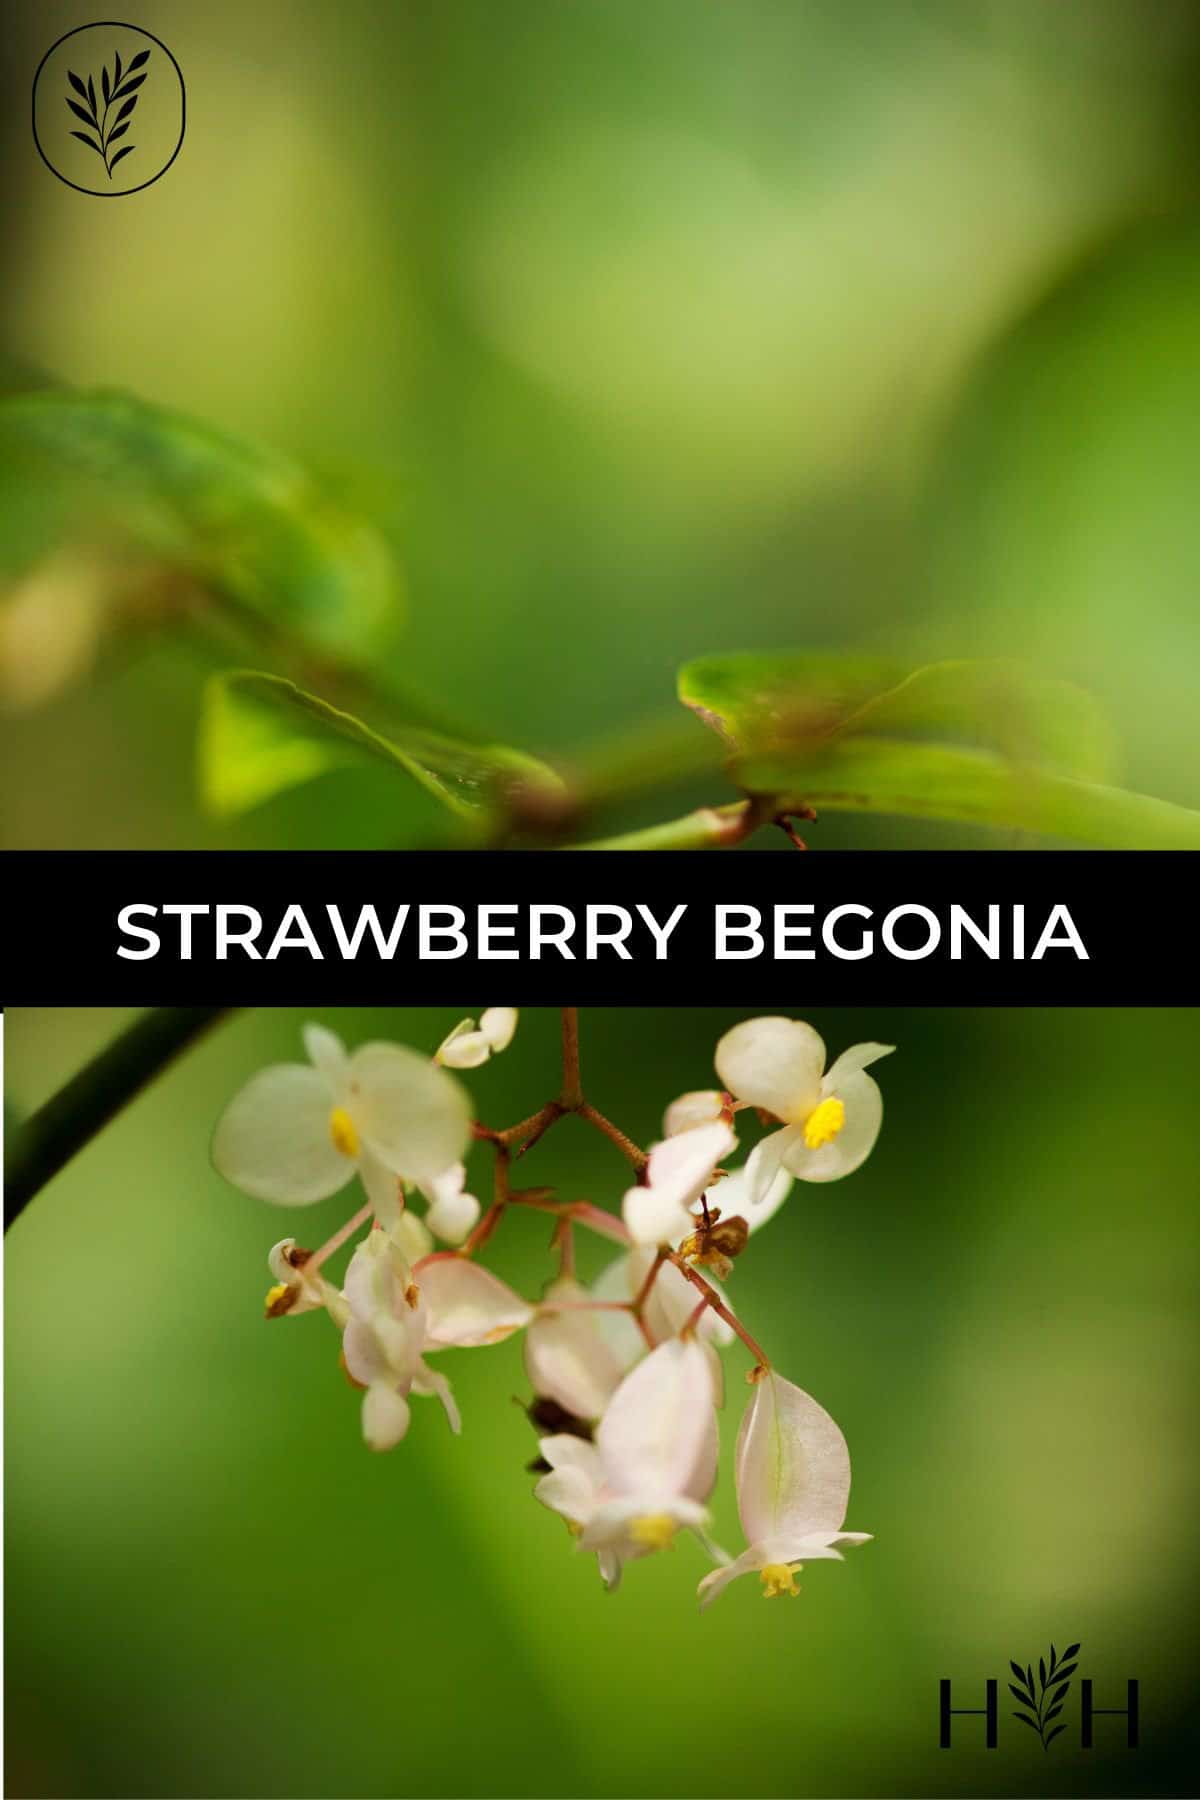 Strawberry begonia via @home4theharvest